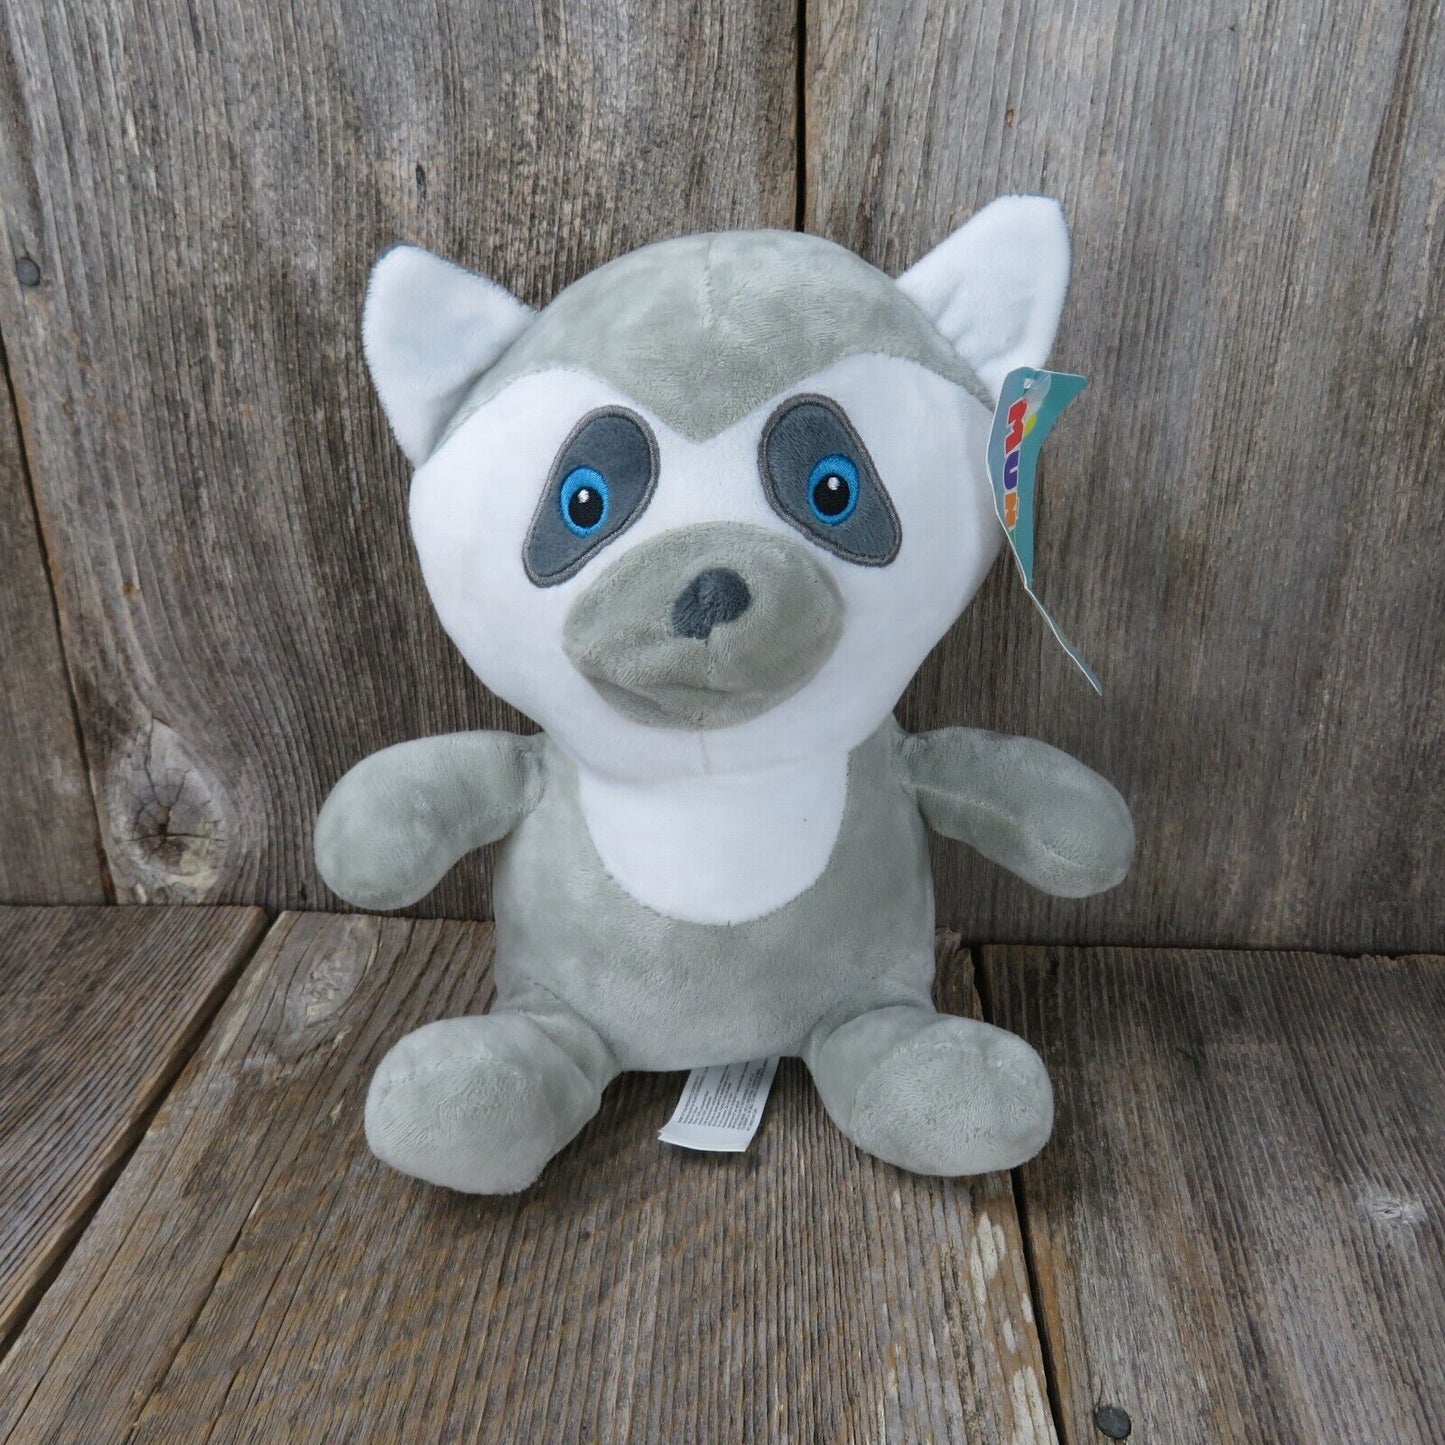 Raccoon Plush Munelocos Stuffed Animal Alvaco Enterprises Sewn Eyes Gray White